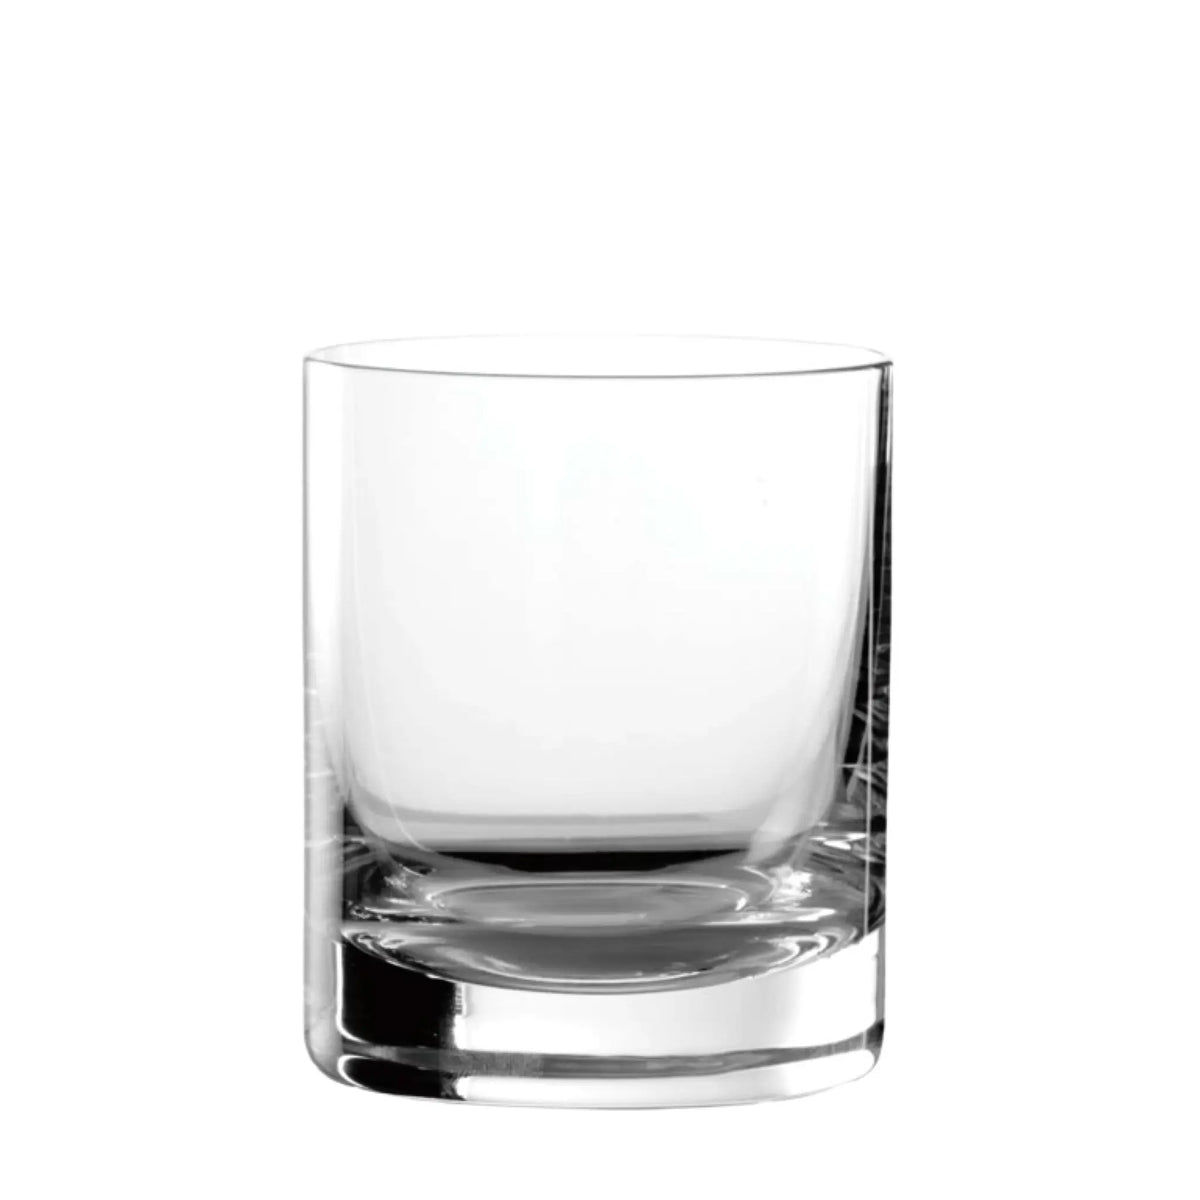 Ilios--Gläser & Accessoires-Ilios Trinkglas Nr. 9 (6 Stk.)-WINECOM